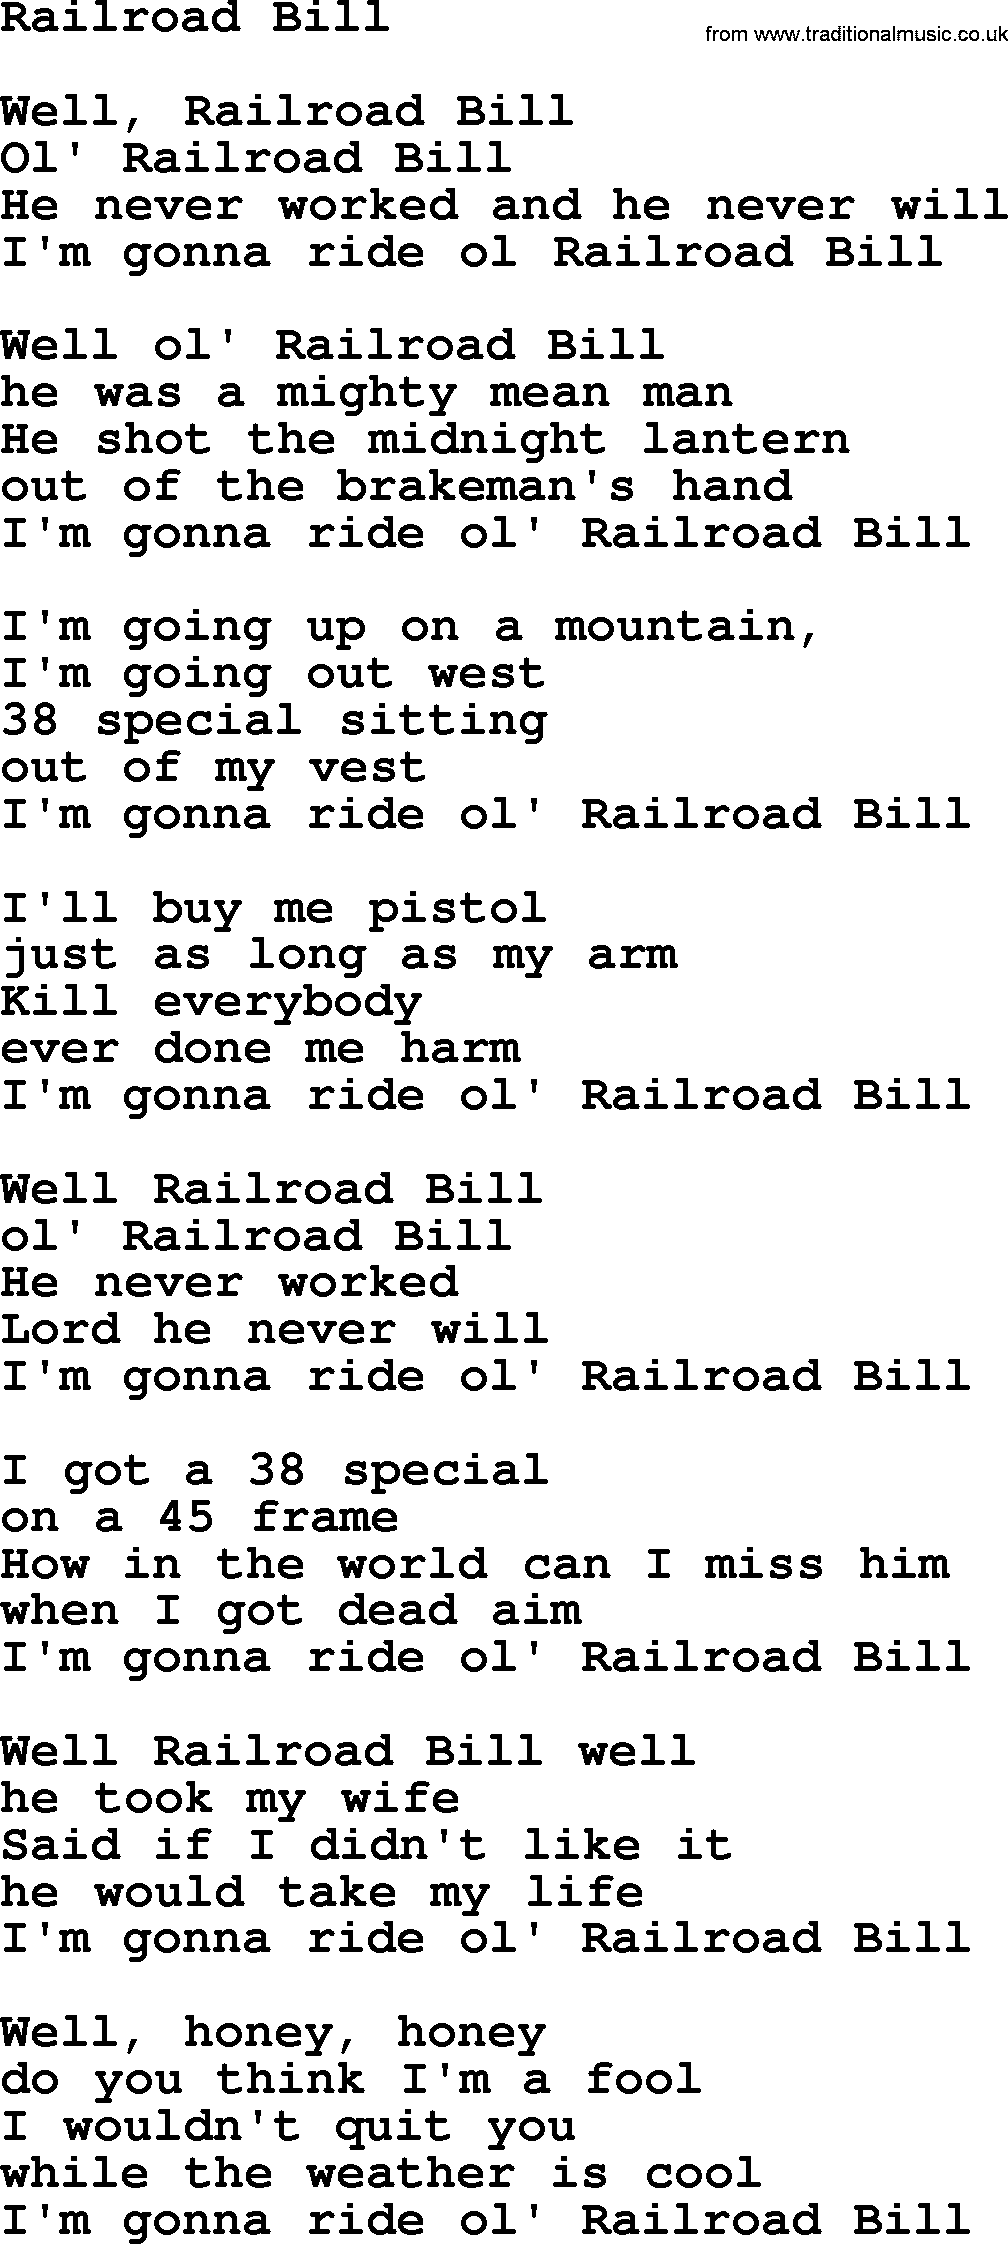 Joan Baez song Railroad Bill, lyrics